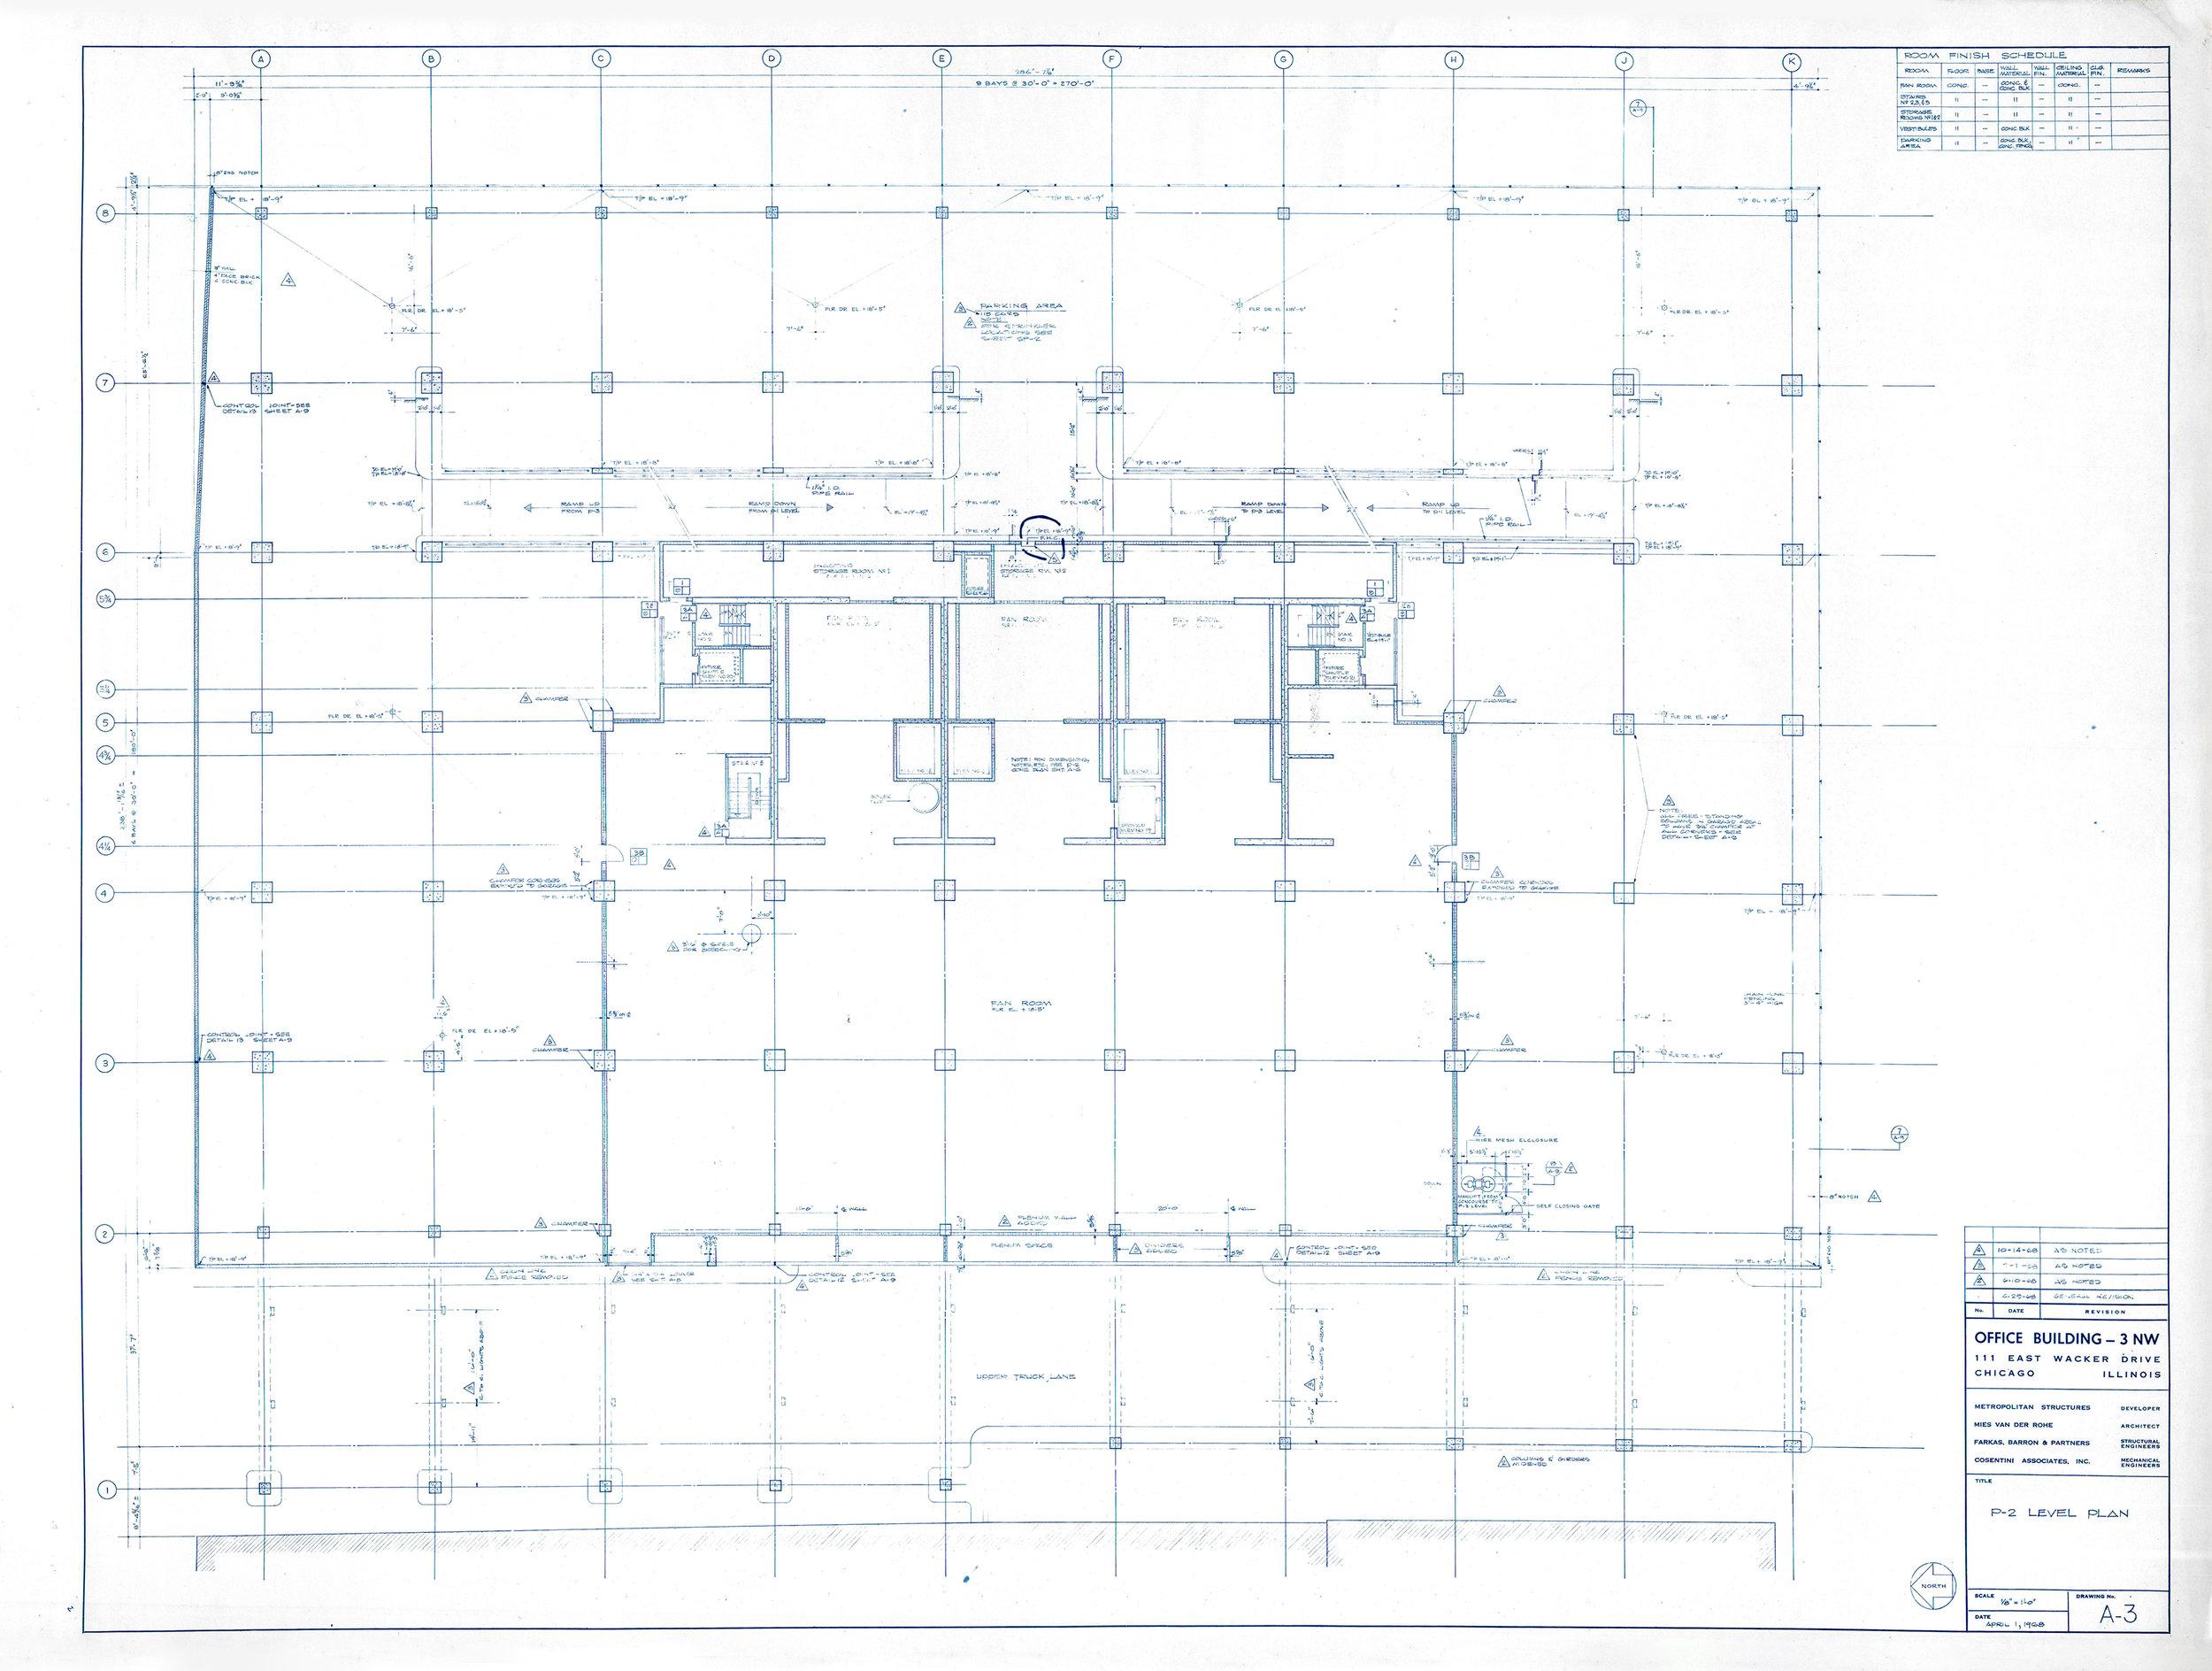 Plexiglass Mies van der Rohe Blueprint, One Charles Center, Baltimore 1961, Elevations 